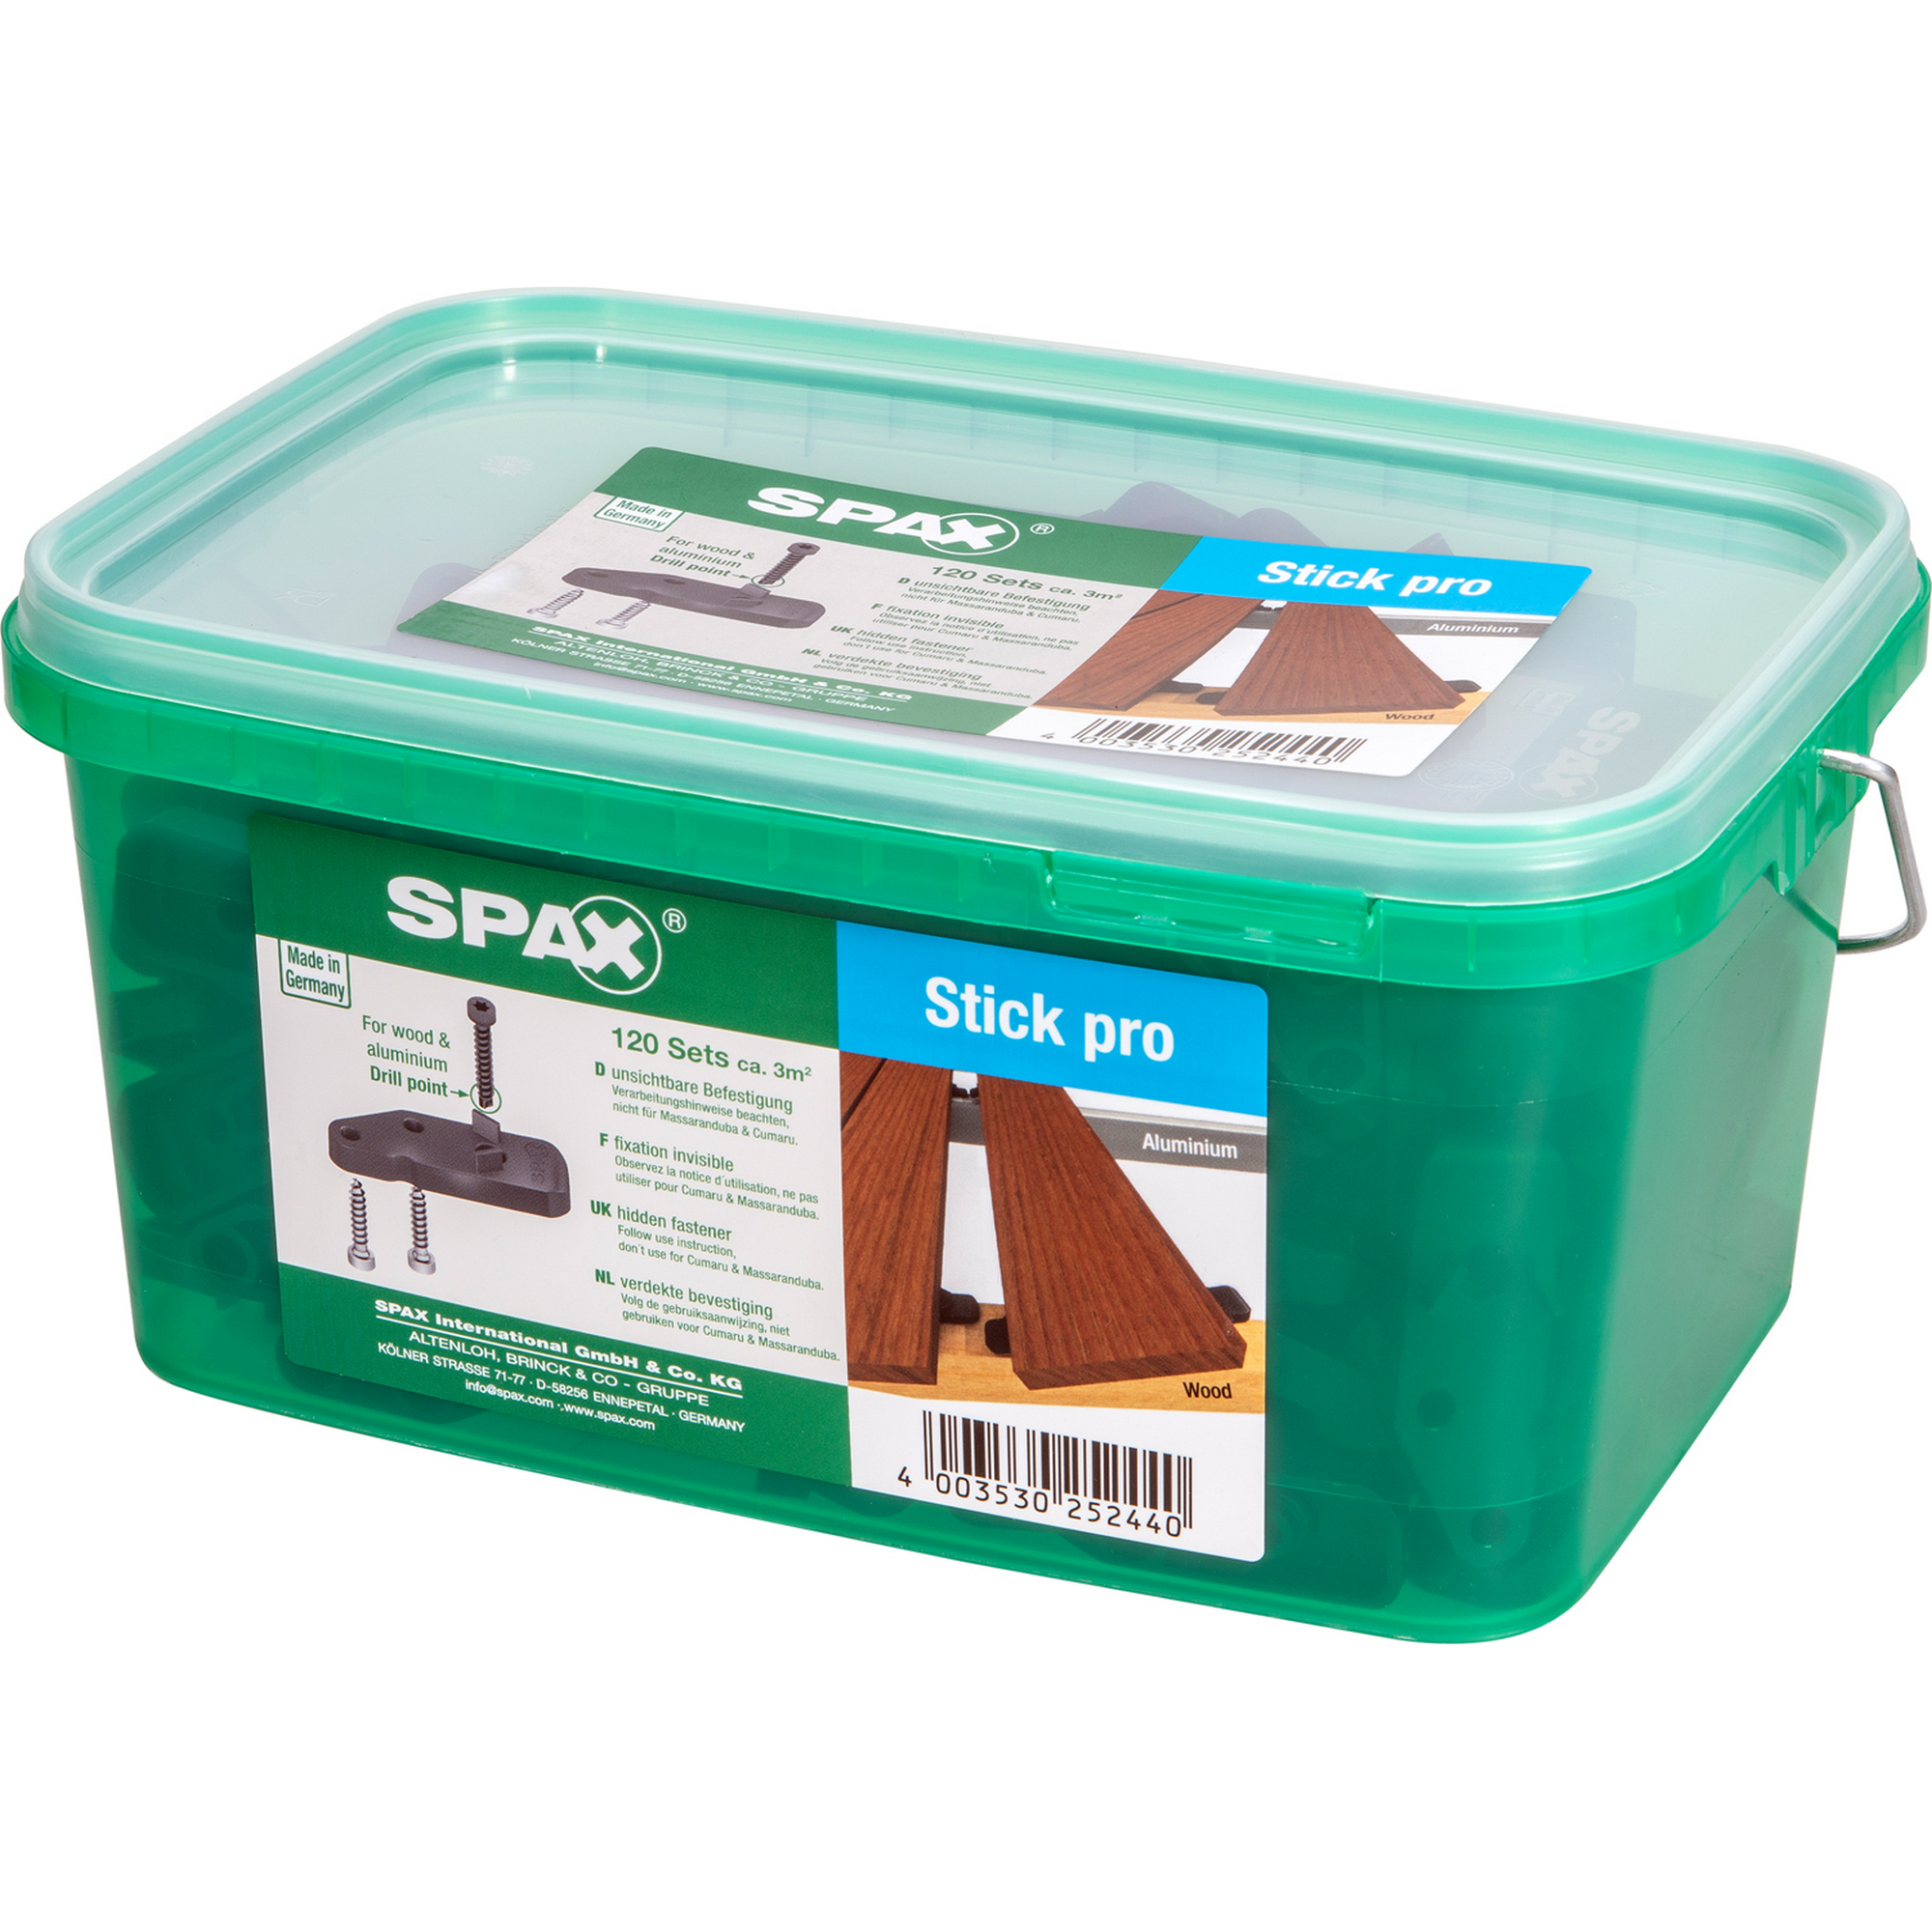 SPAX-Stick Terrasse, 120 Stück + product picture